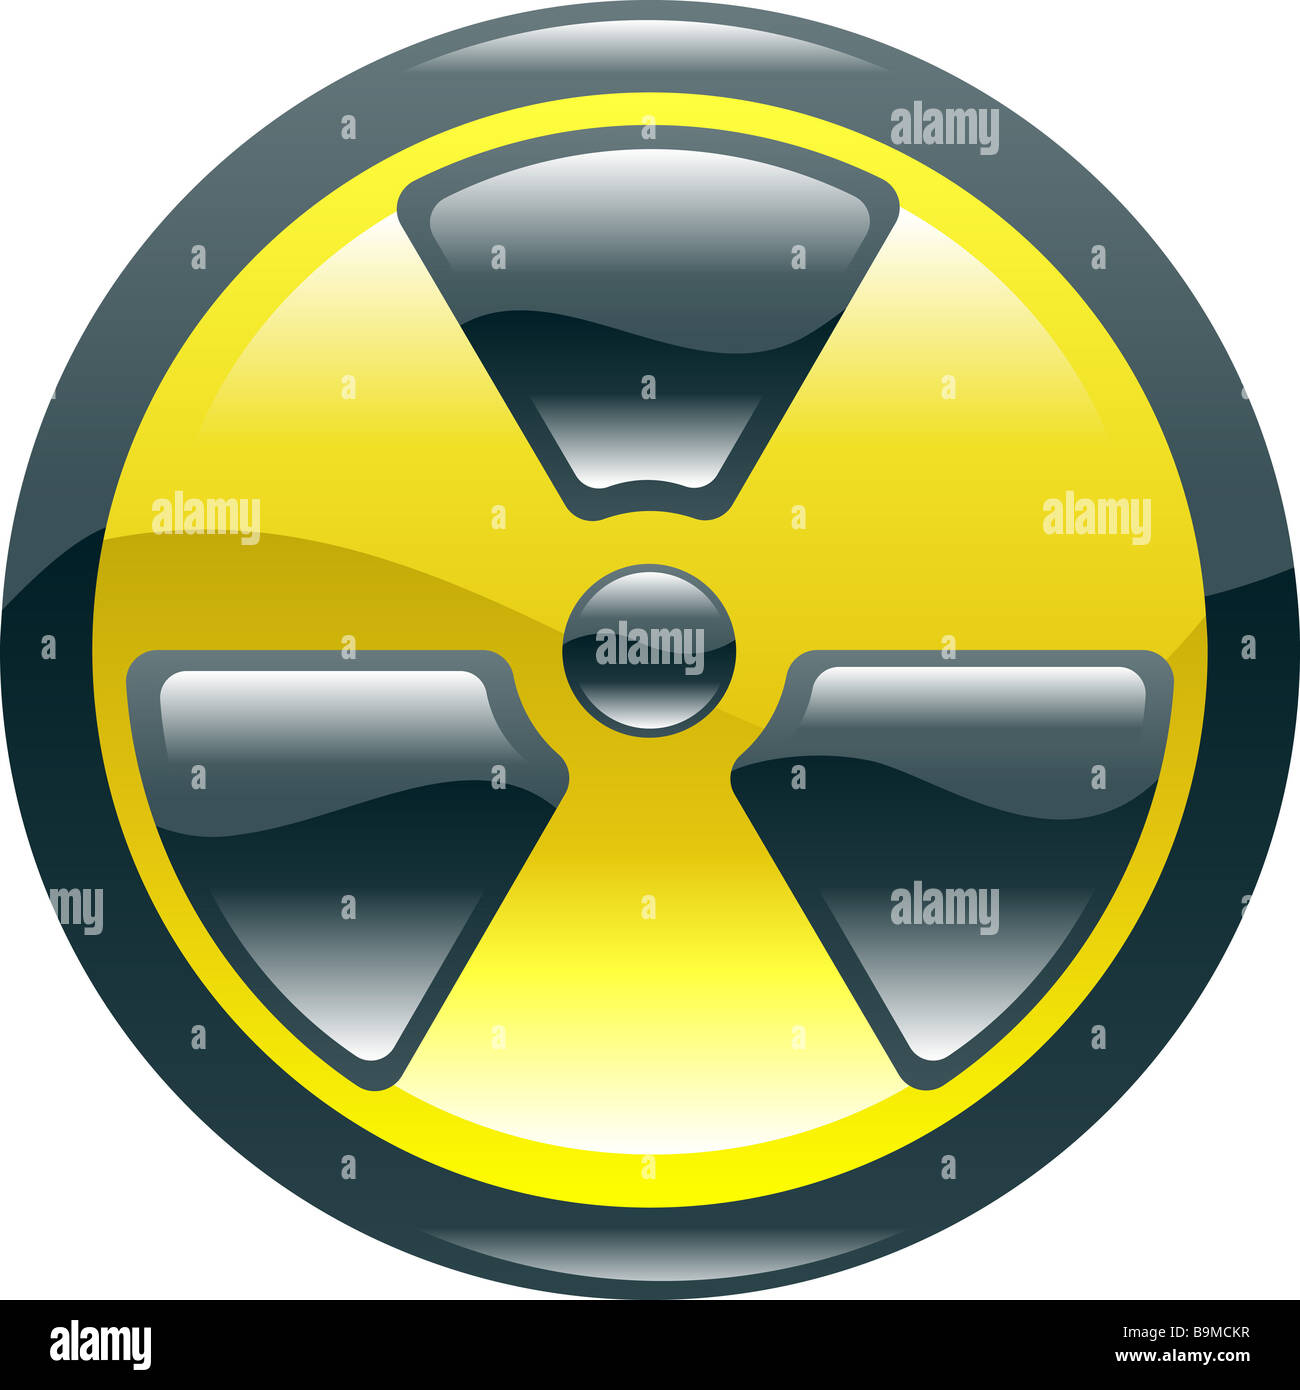 A glossy shiny radiation symbol icon illustration Stock Photo